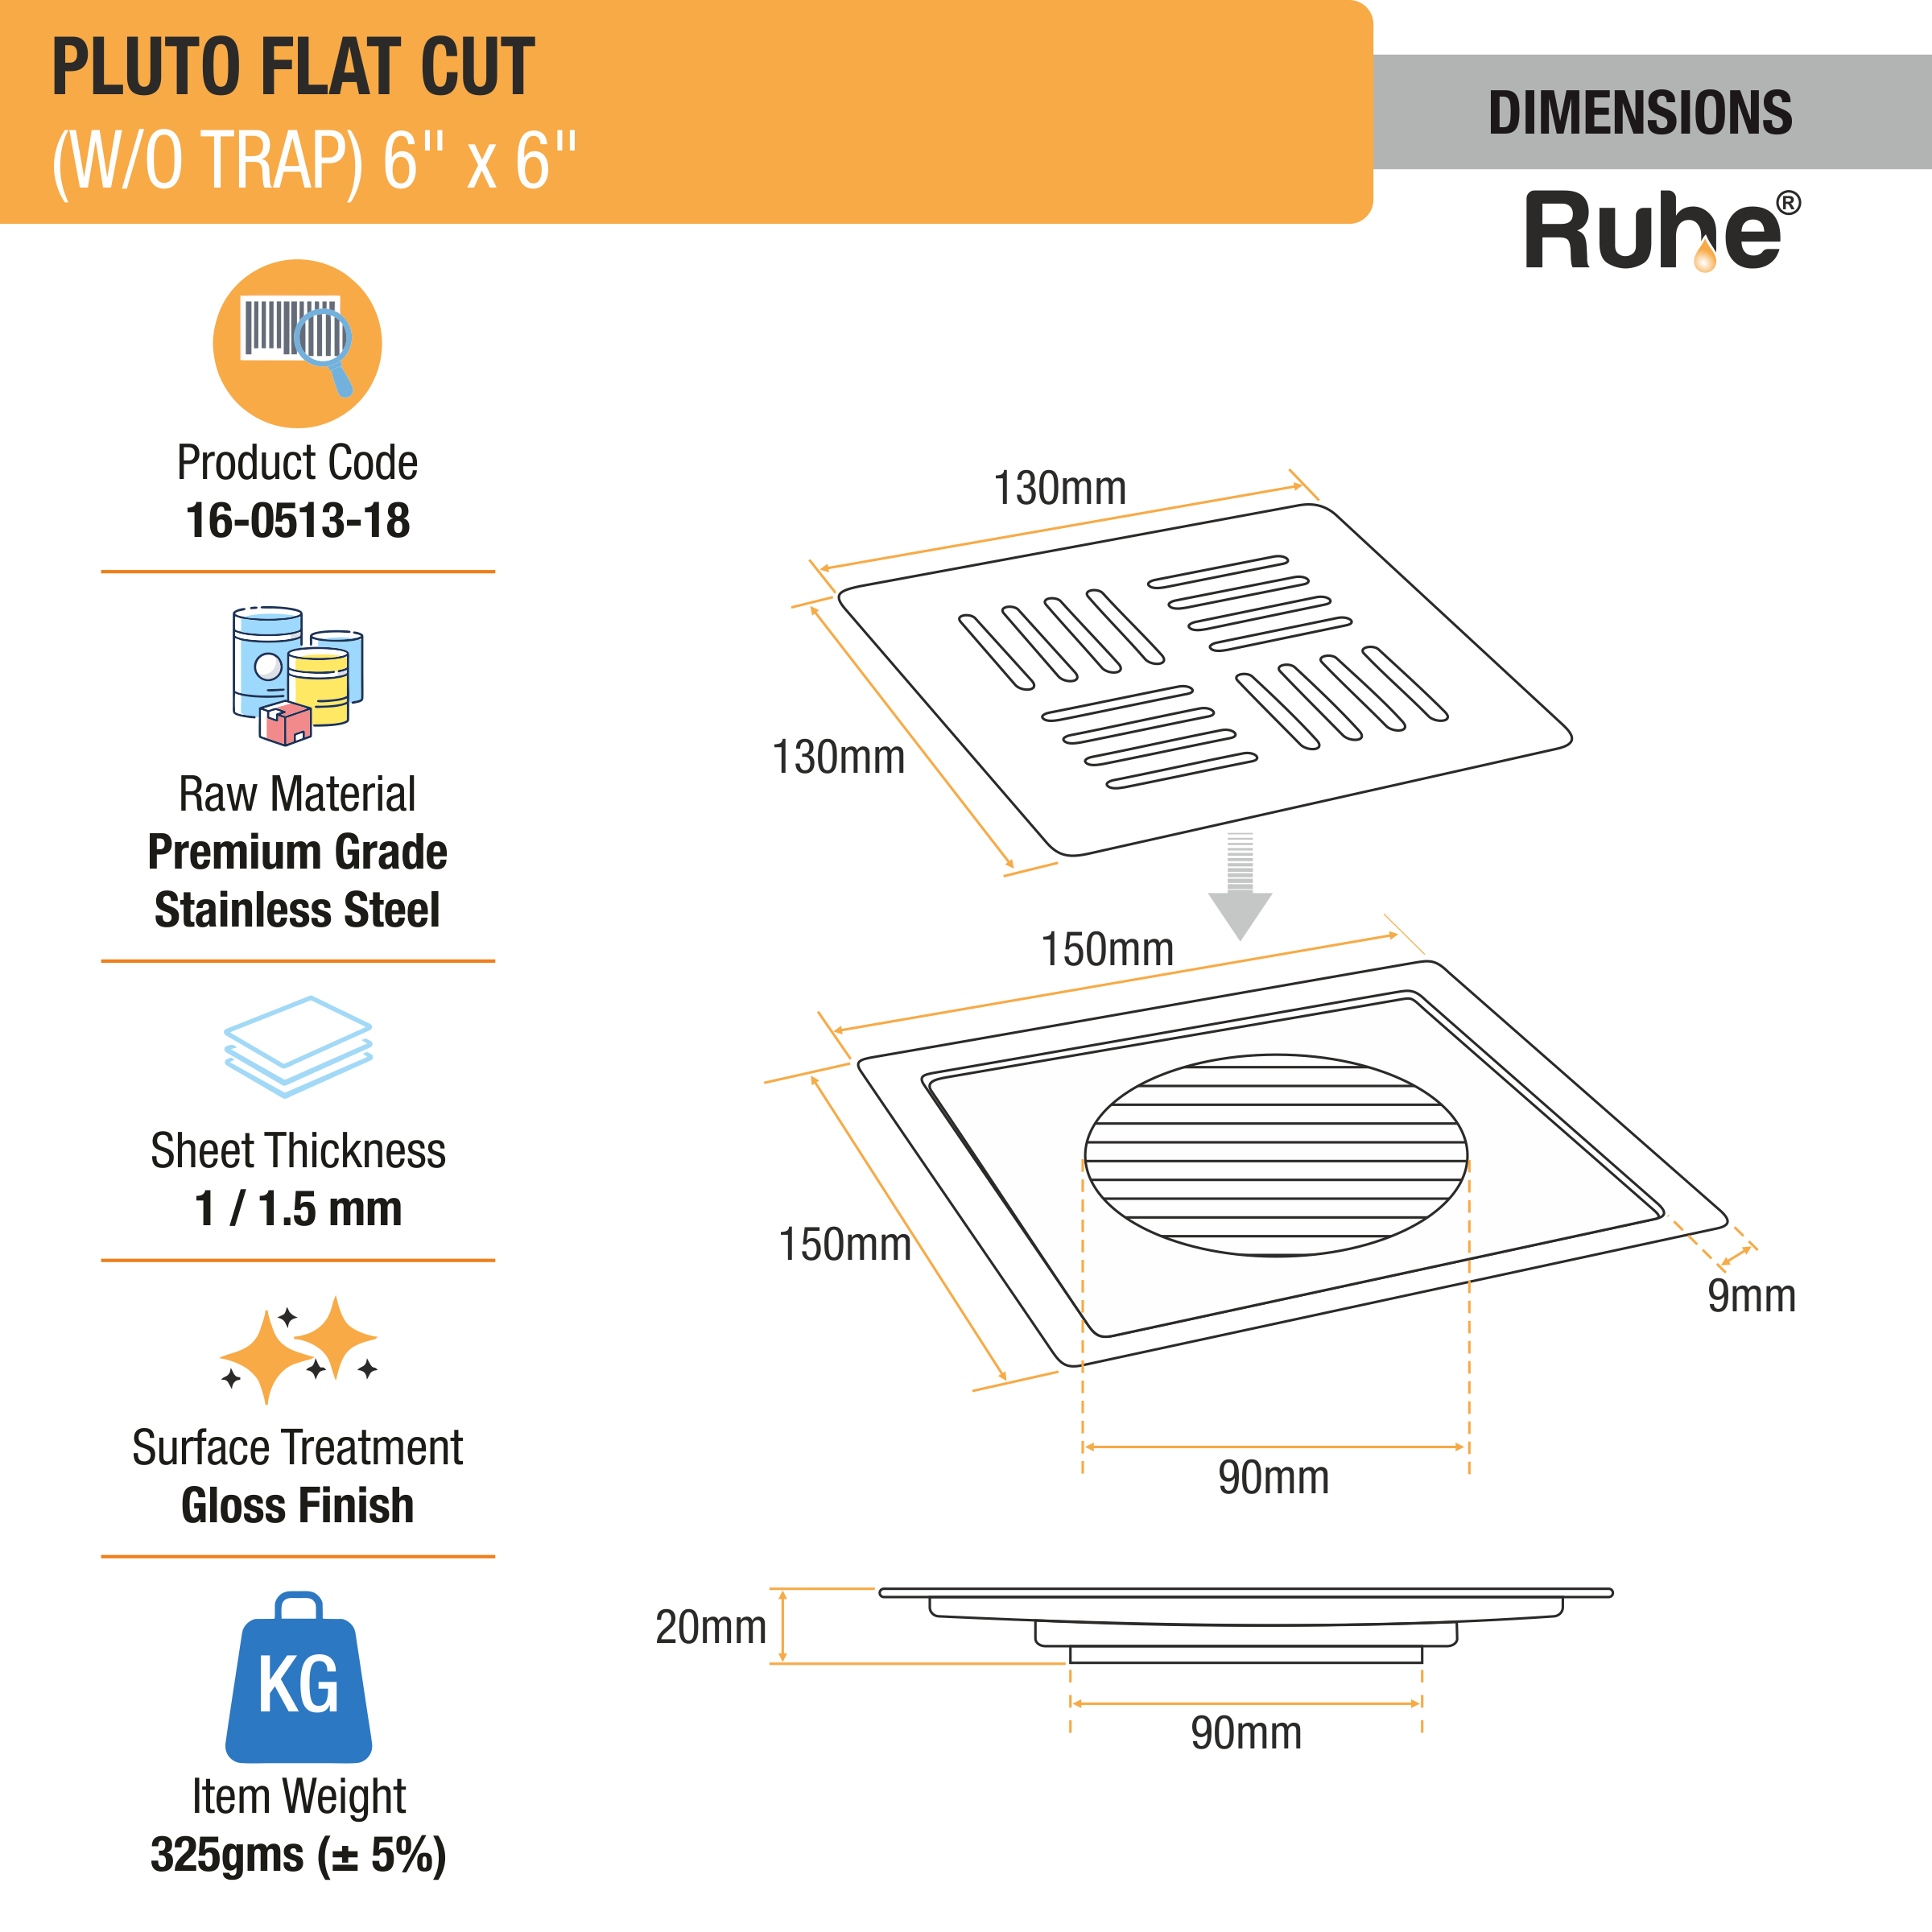 Pluto Square Premium Flat Cut Floor Drain (6 x 6 Inches) dimensions and size